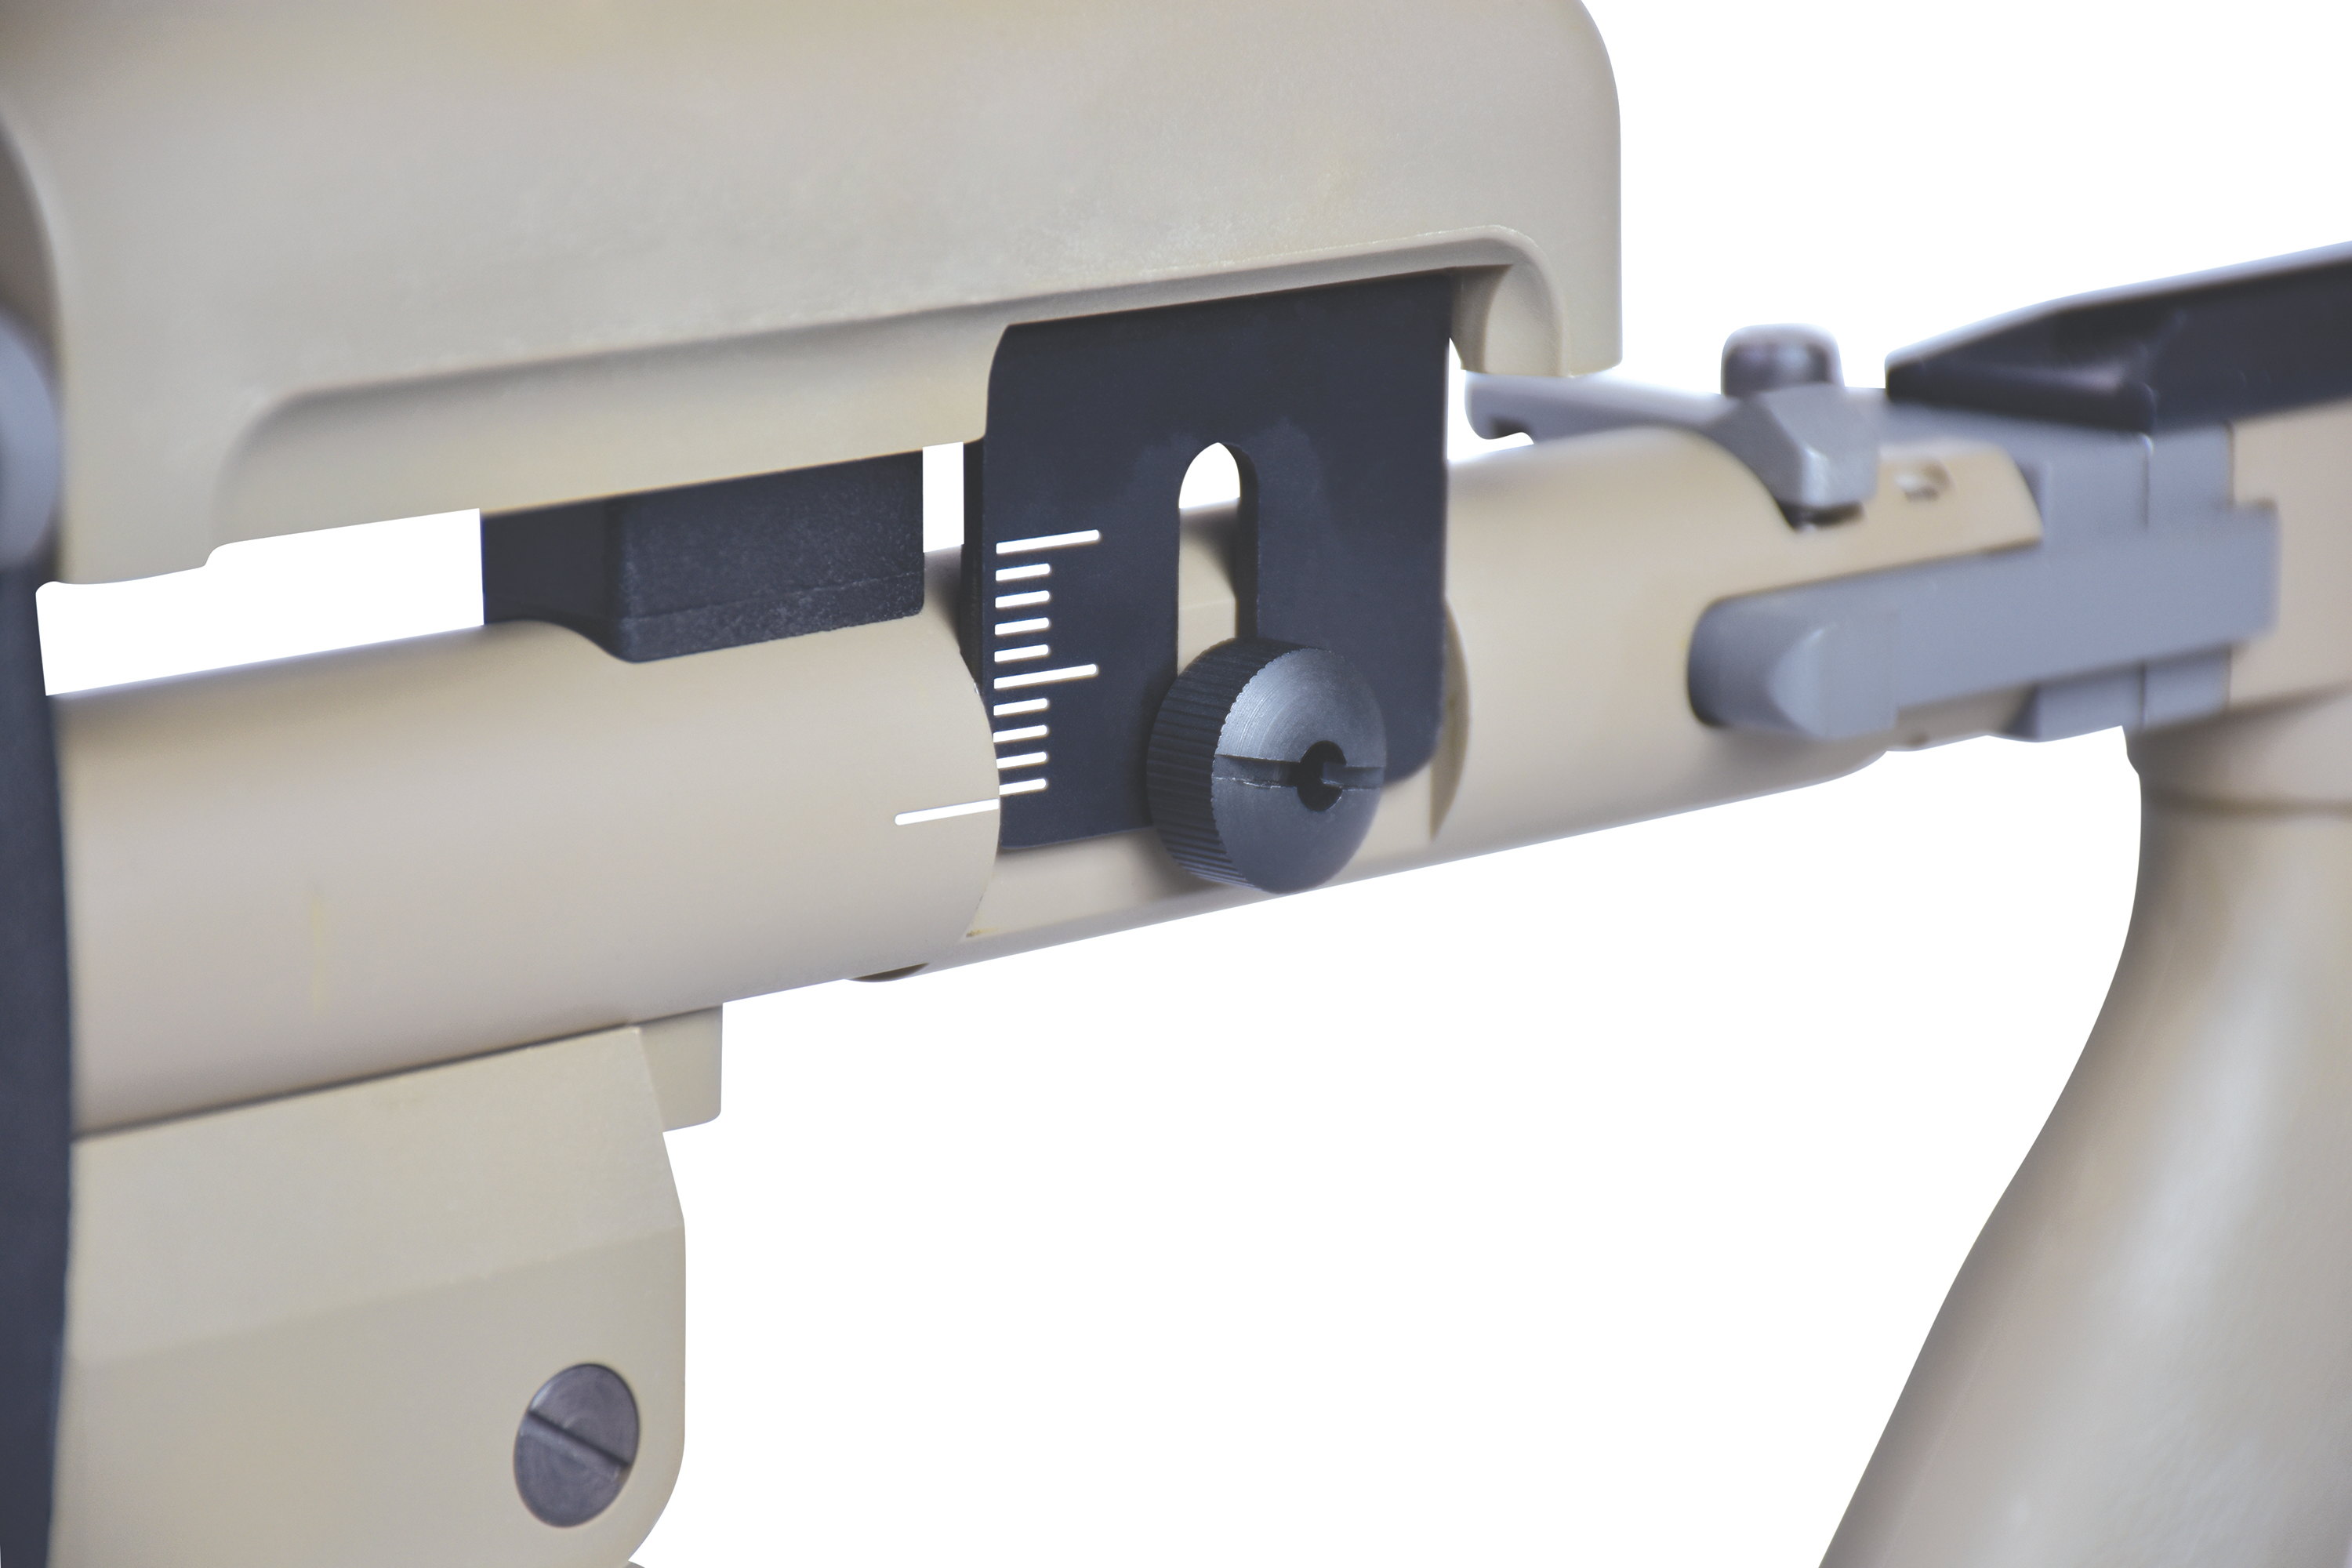 PGM 338 Sniper Tan 6mm - Airsoft Gas